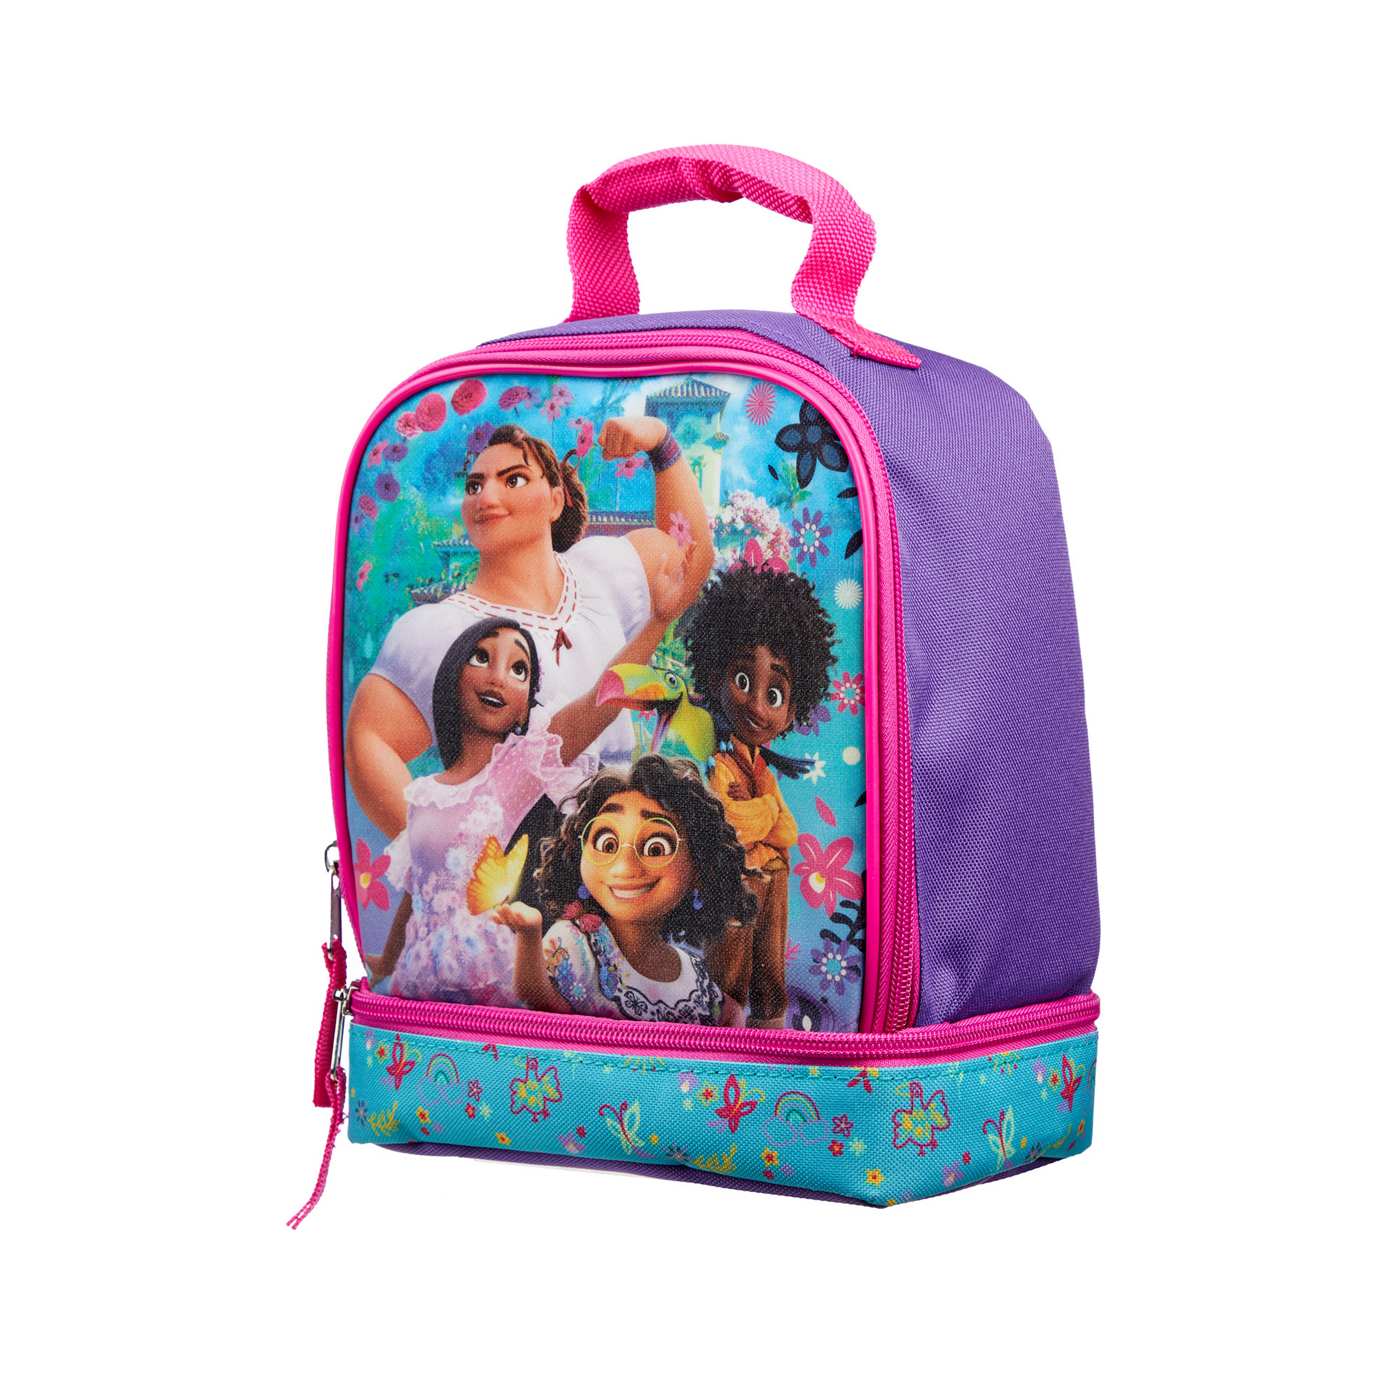 Disney Encanto Dual Compartment Lunch Bag; image 2 of 2